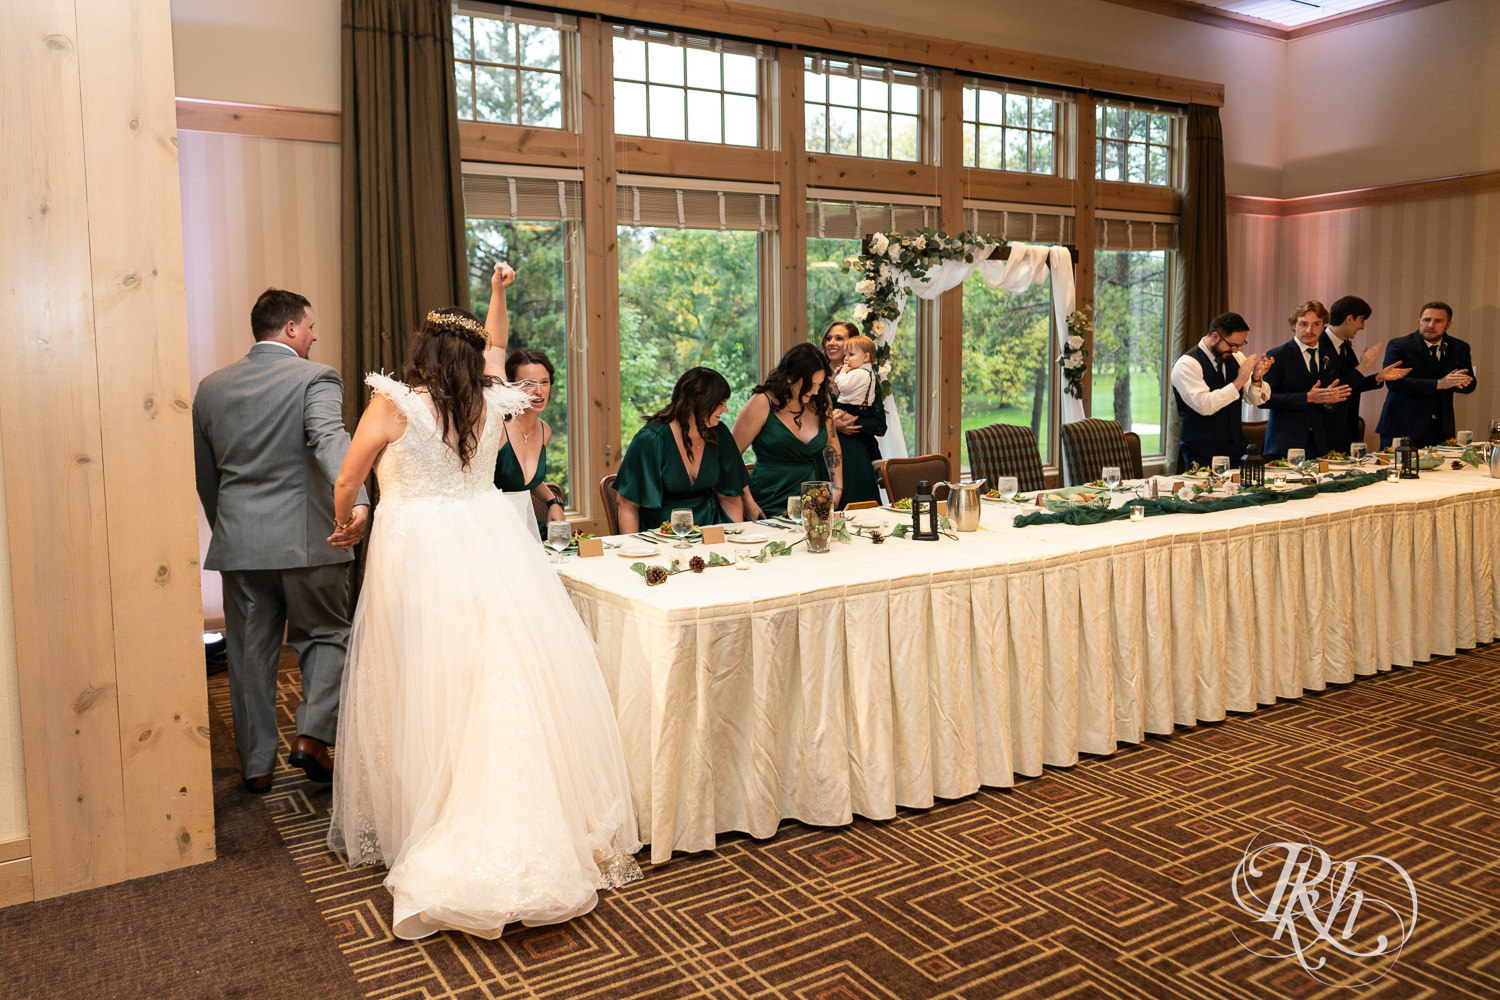 Bride and groom enter wedding reception at Bunker Hills Event Center in Coon Rapids, Minnesota.